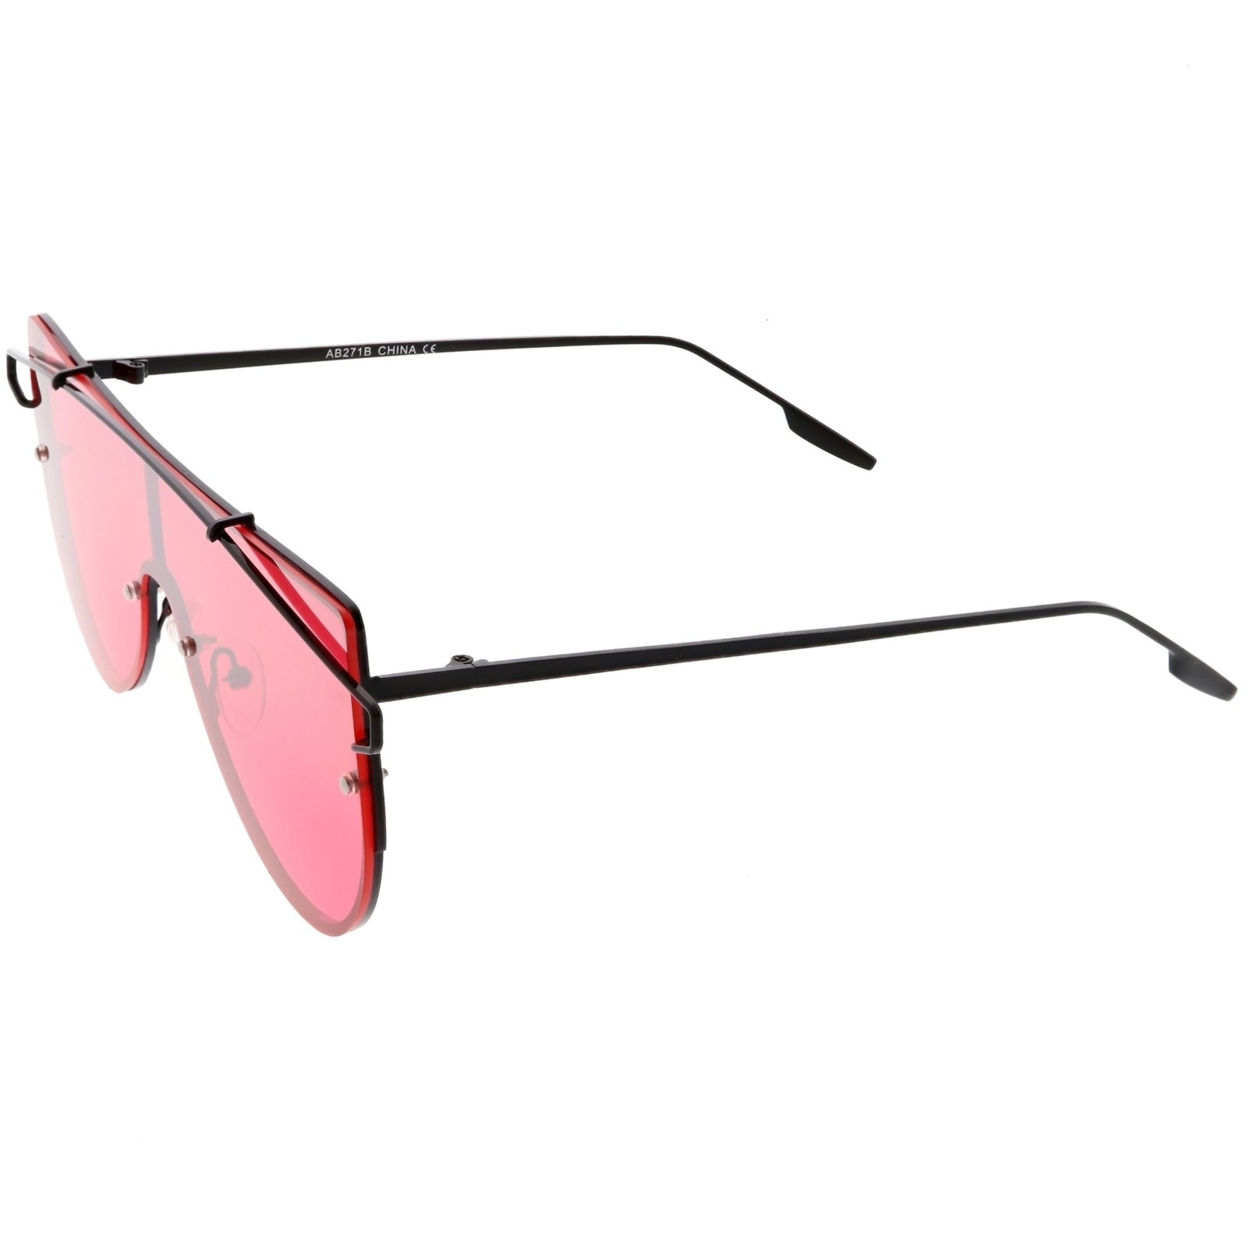 Futuristic Rimless Shield Sunglasses Metal Crossbar Colored Mono Lens 64mm - Gold / Clear Tinted